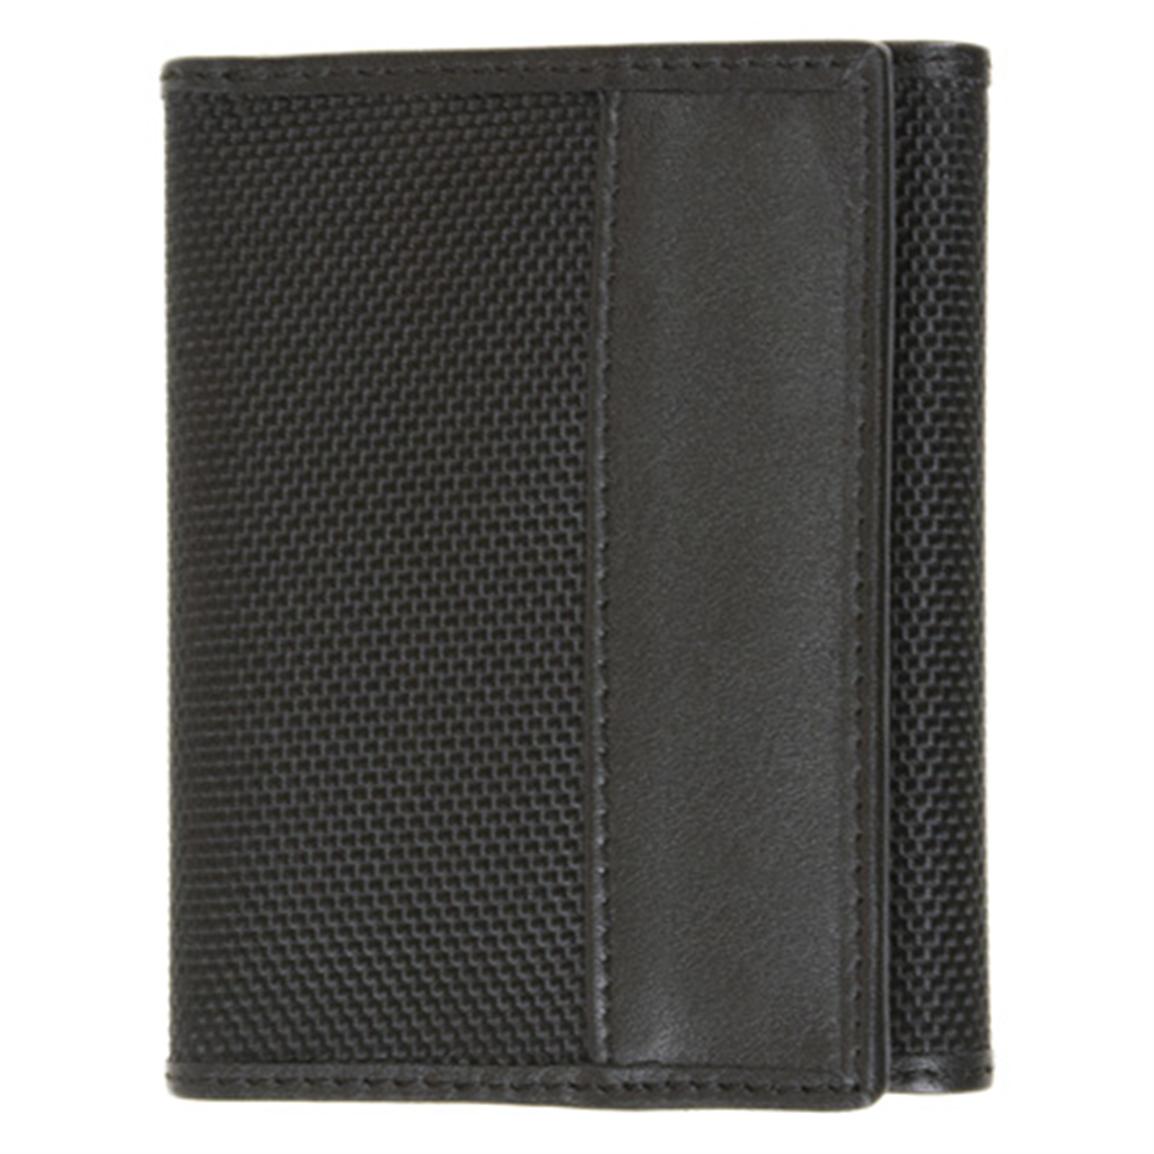 Travelon RFID - blocking Tri - fold Wallet, Black - 229592, Wallets at